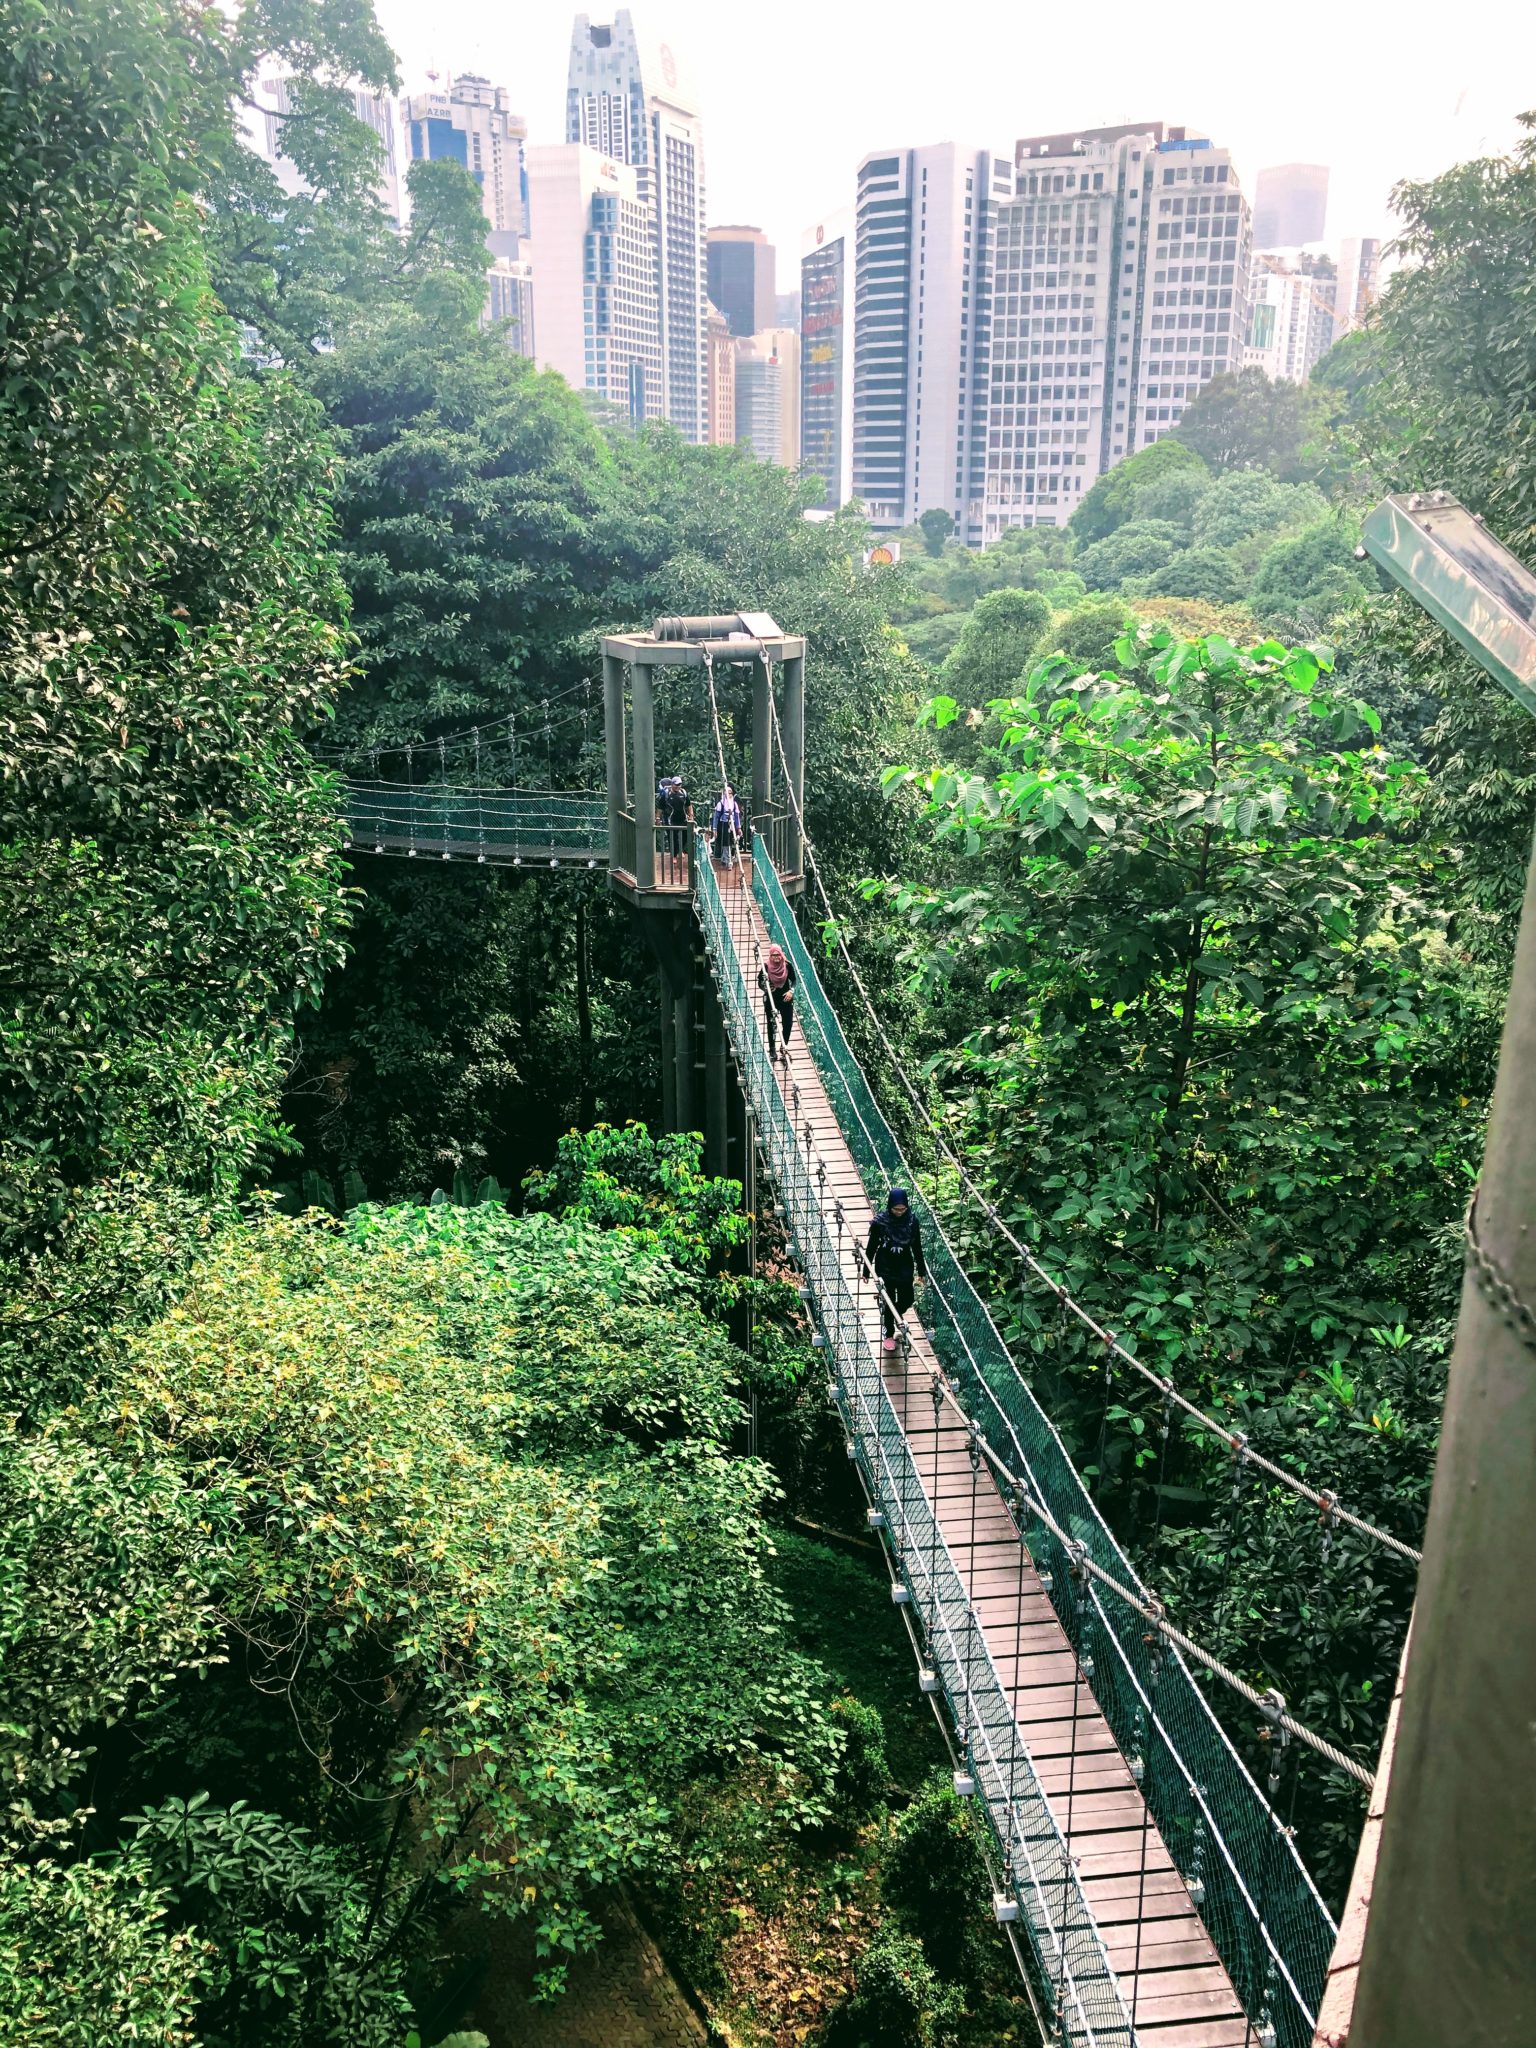 Walking through an urban jungle on a canopy walk.